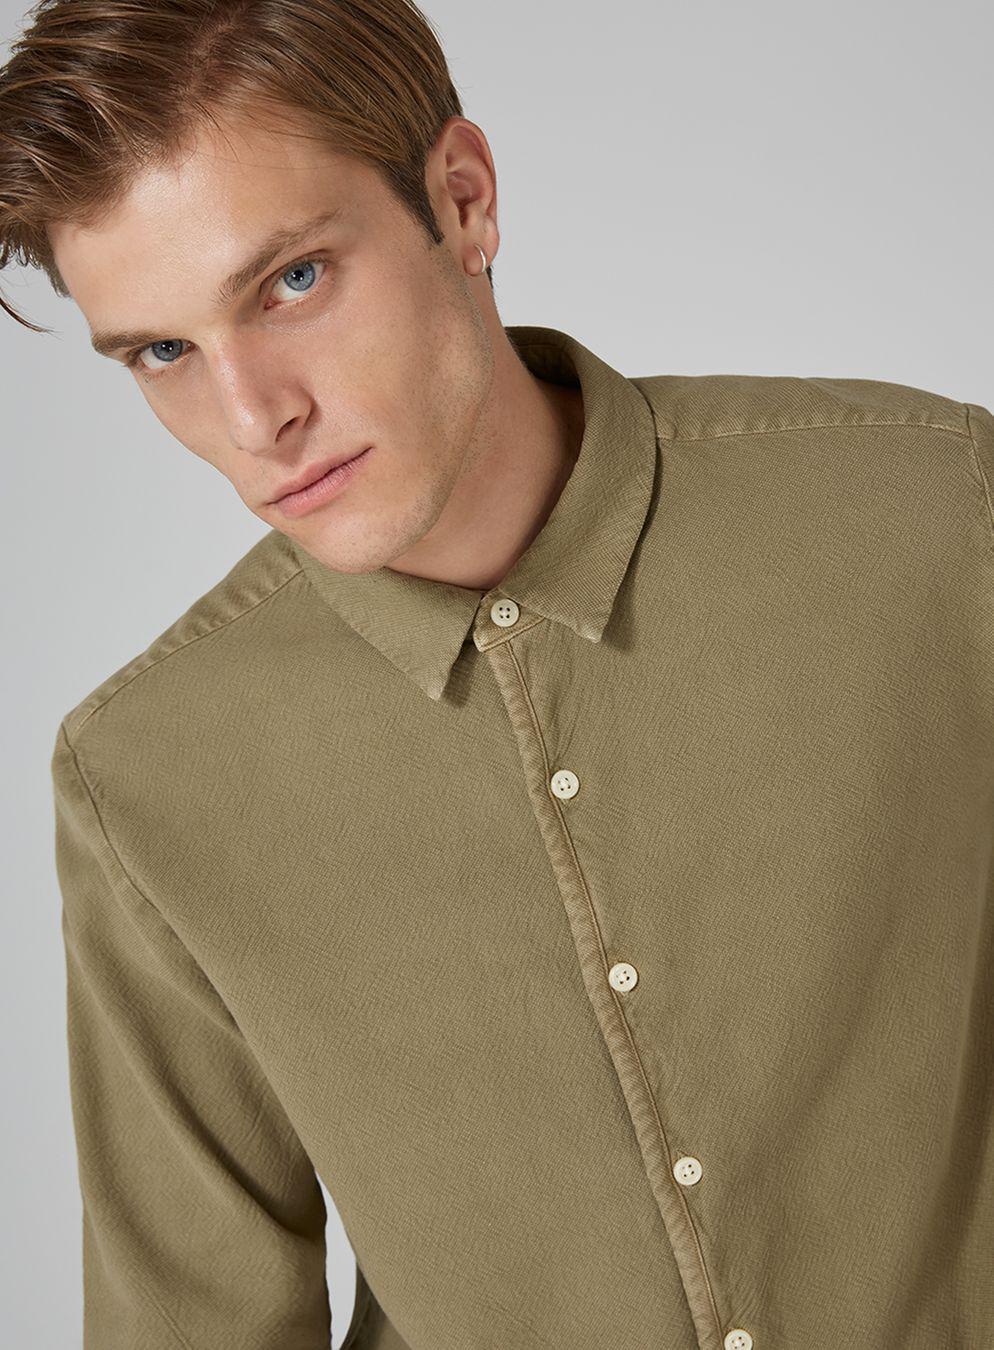 Lyst - Topman Ltd Khaki Bryce Textured Long Sleeve Shirt in Natural for Men